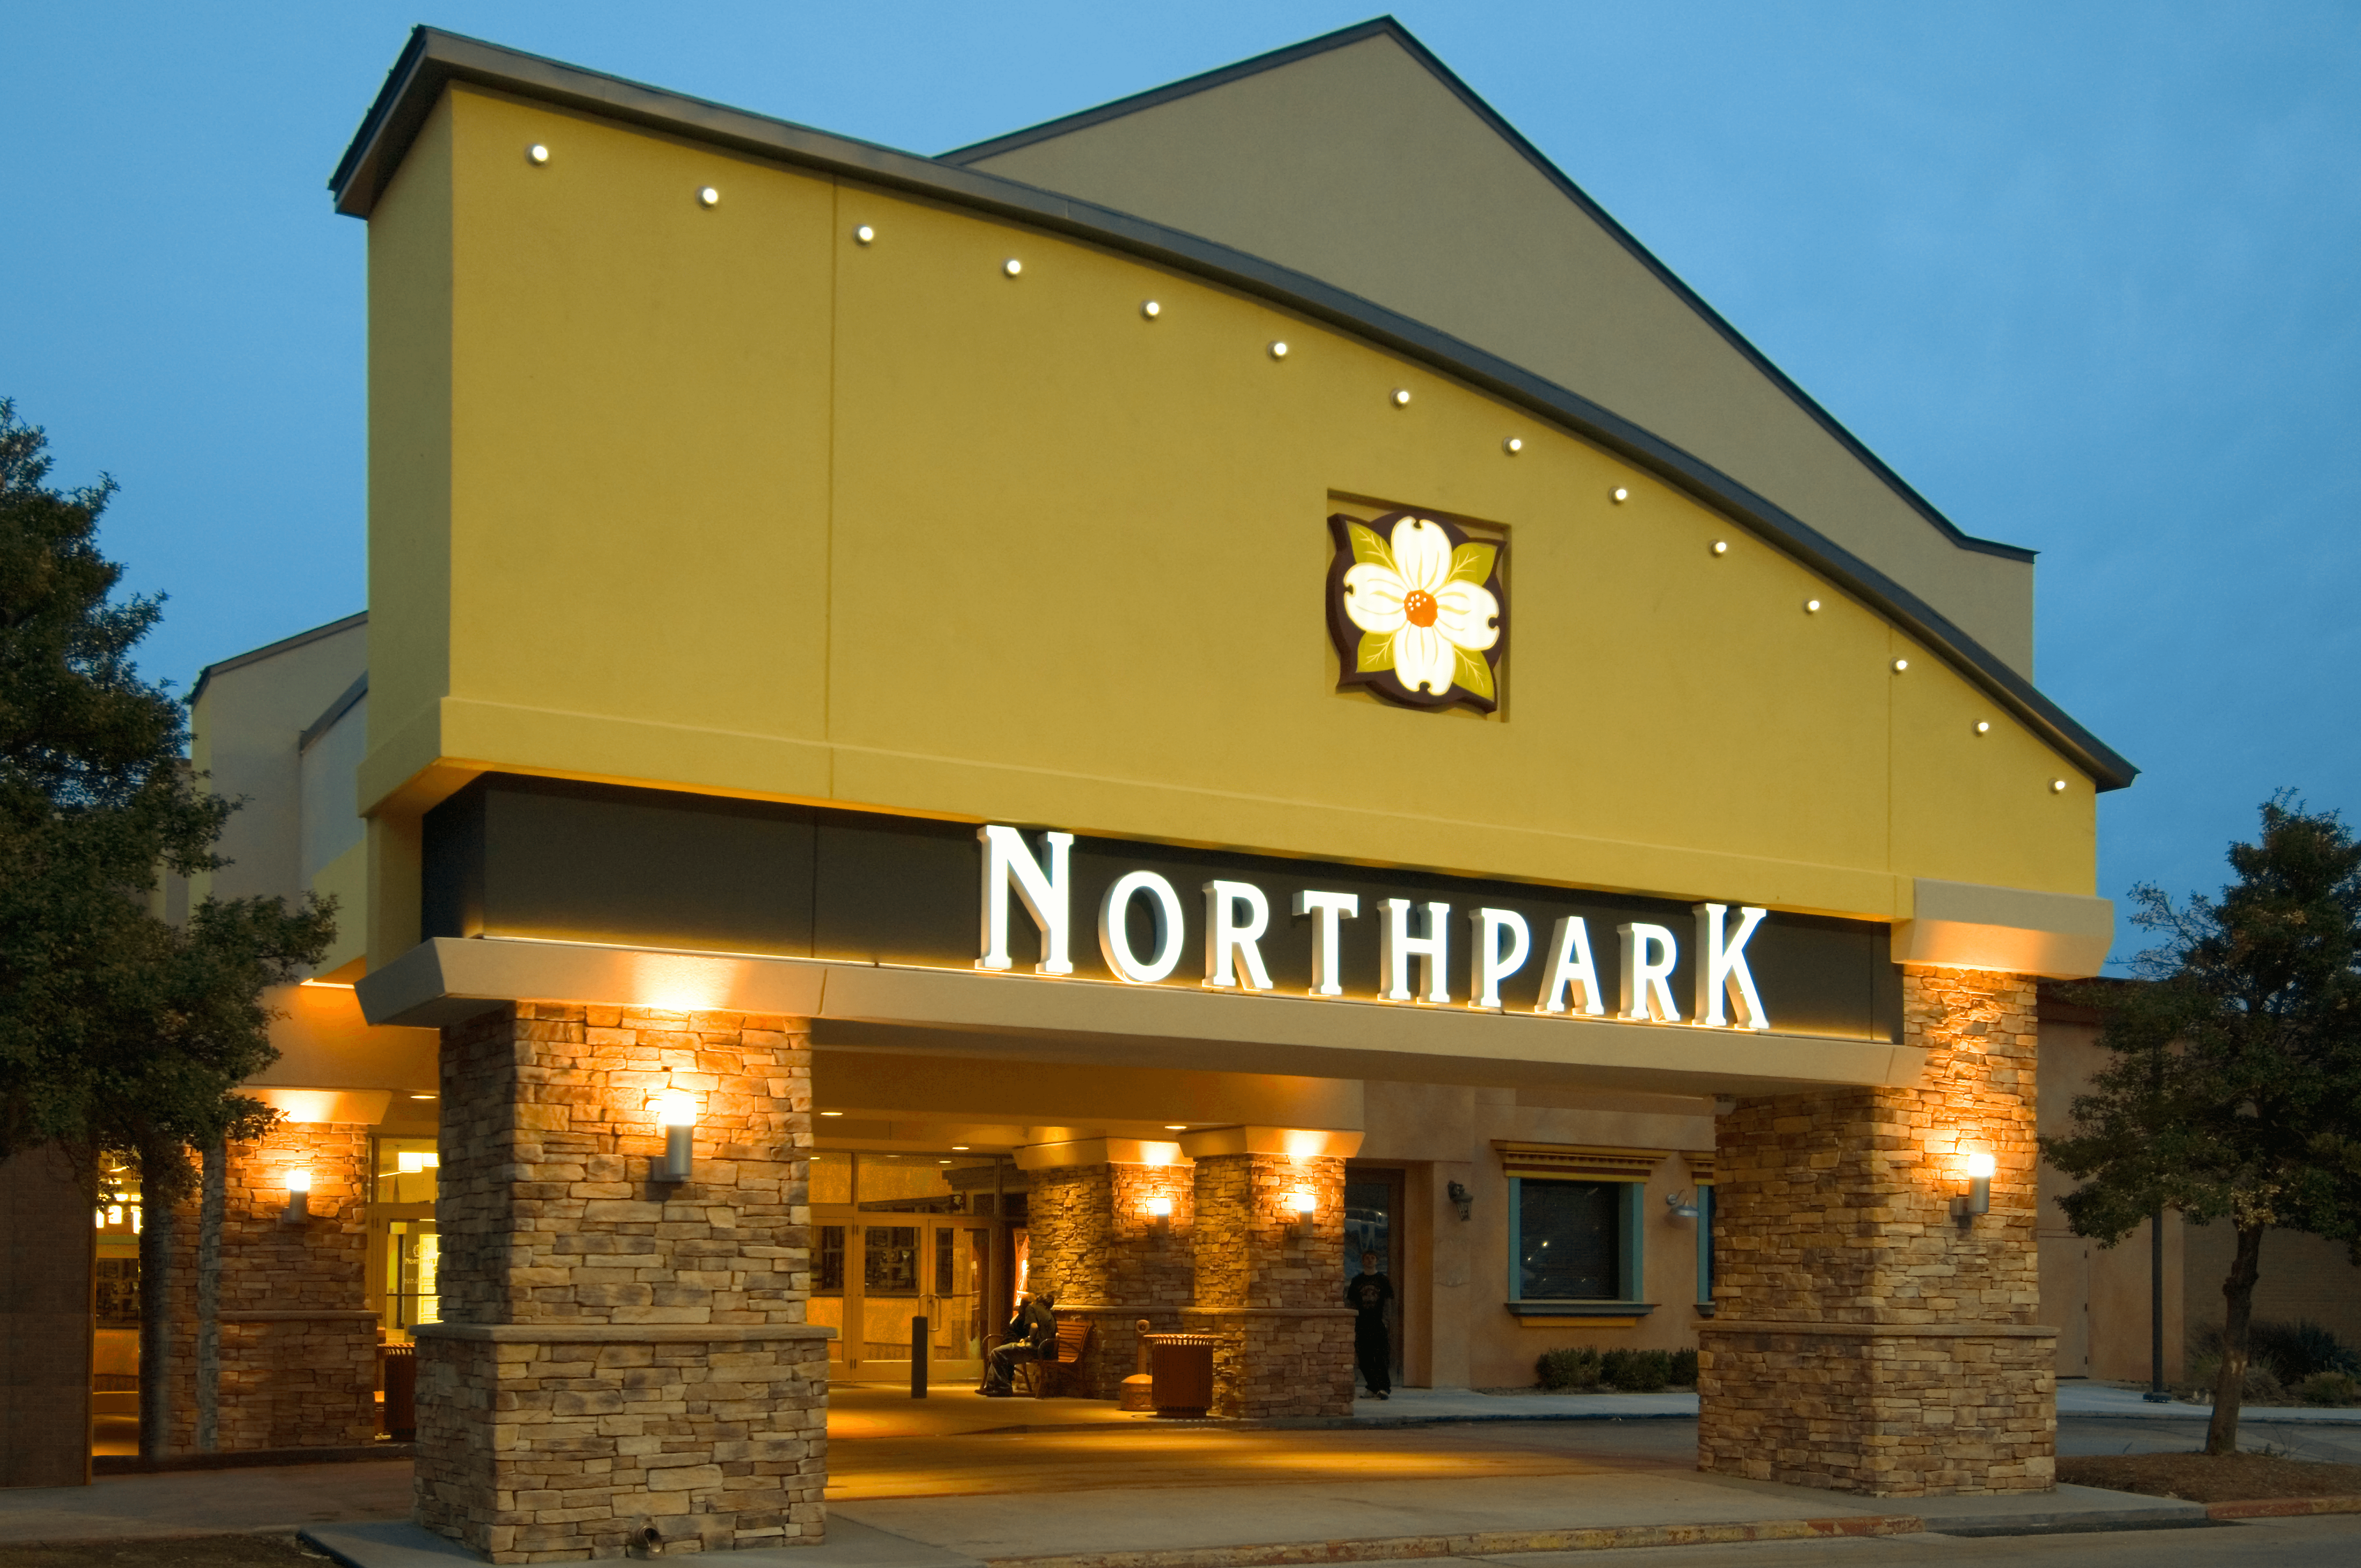 northpark mall logo